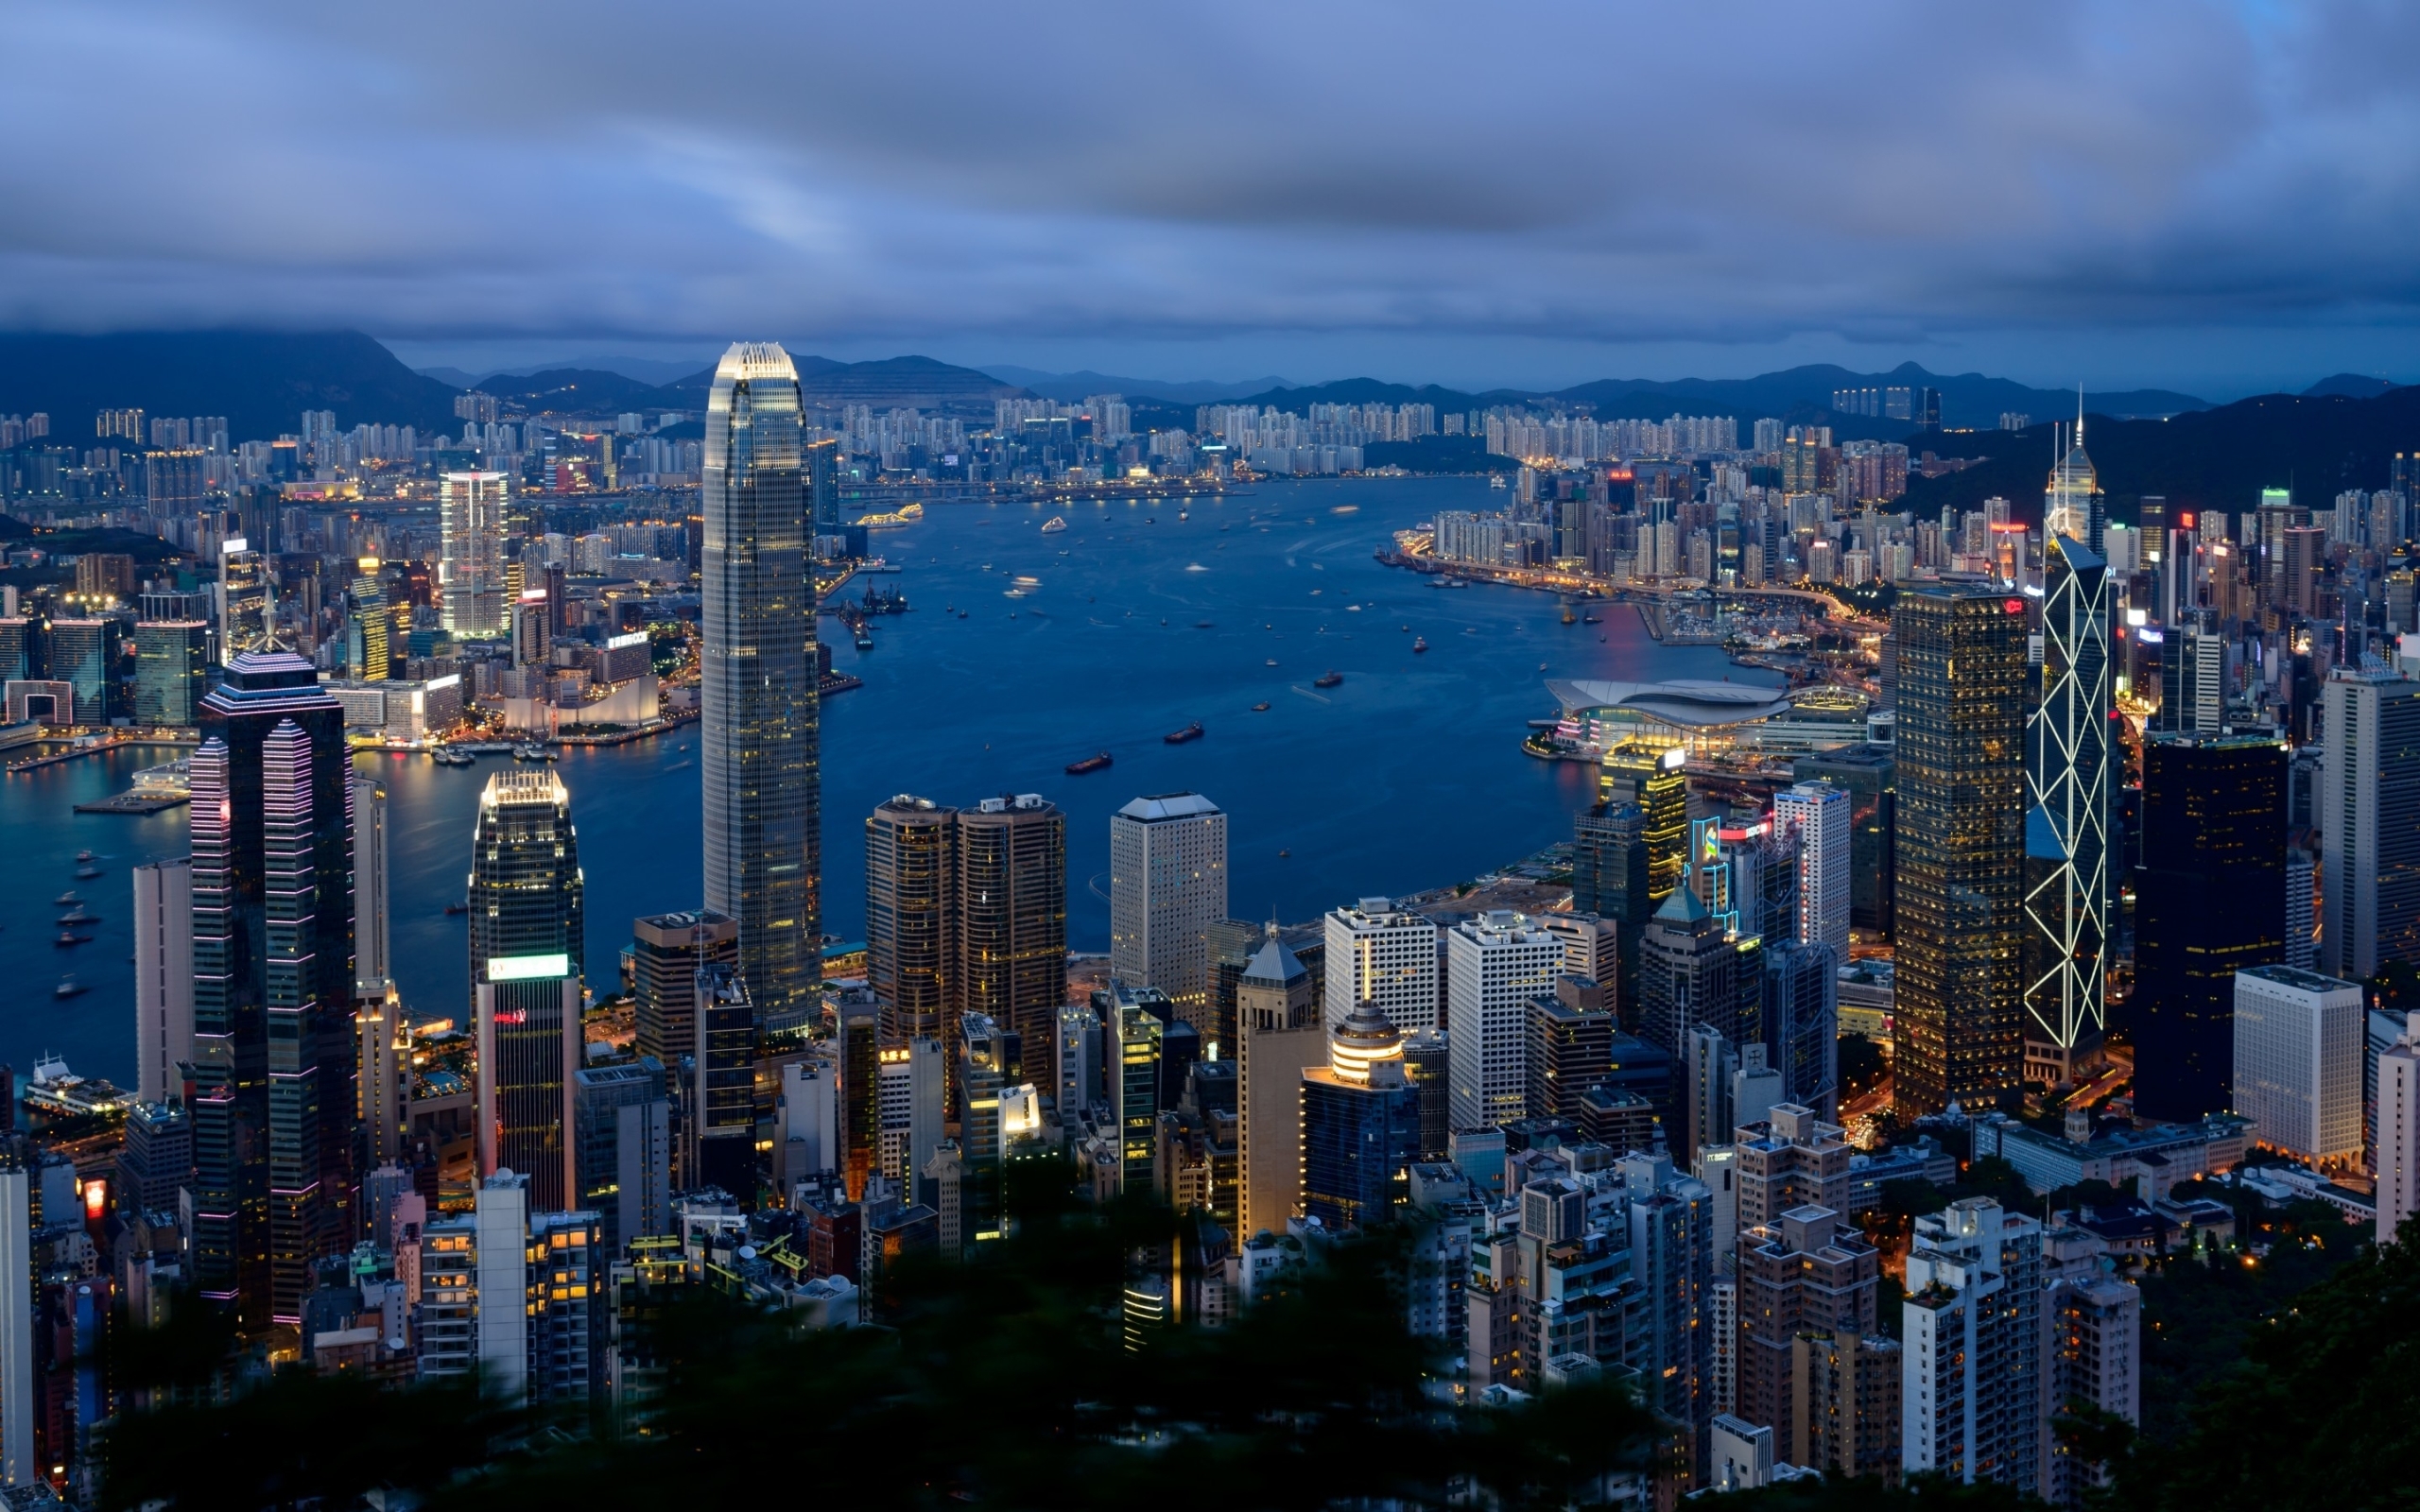 Hong Kong City View Mac Wallpaper Download | Free Mac Wallpapers ...